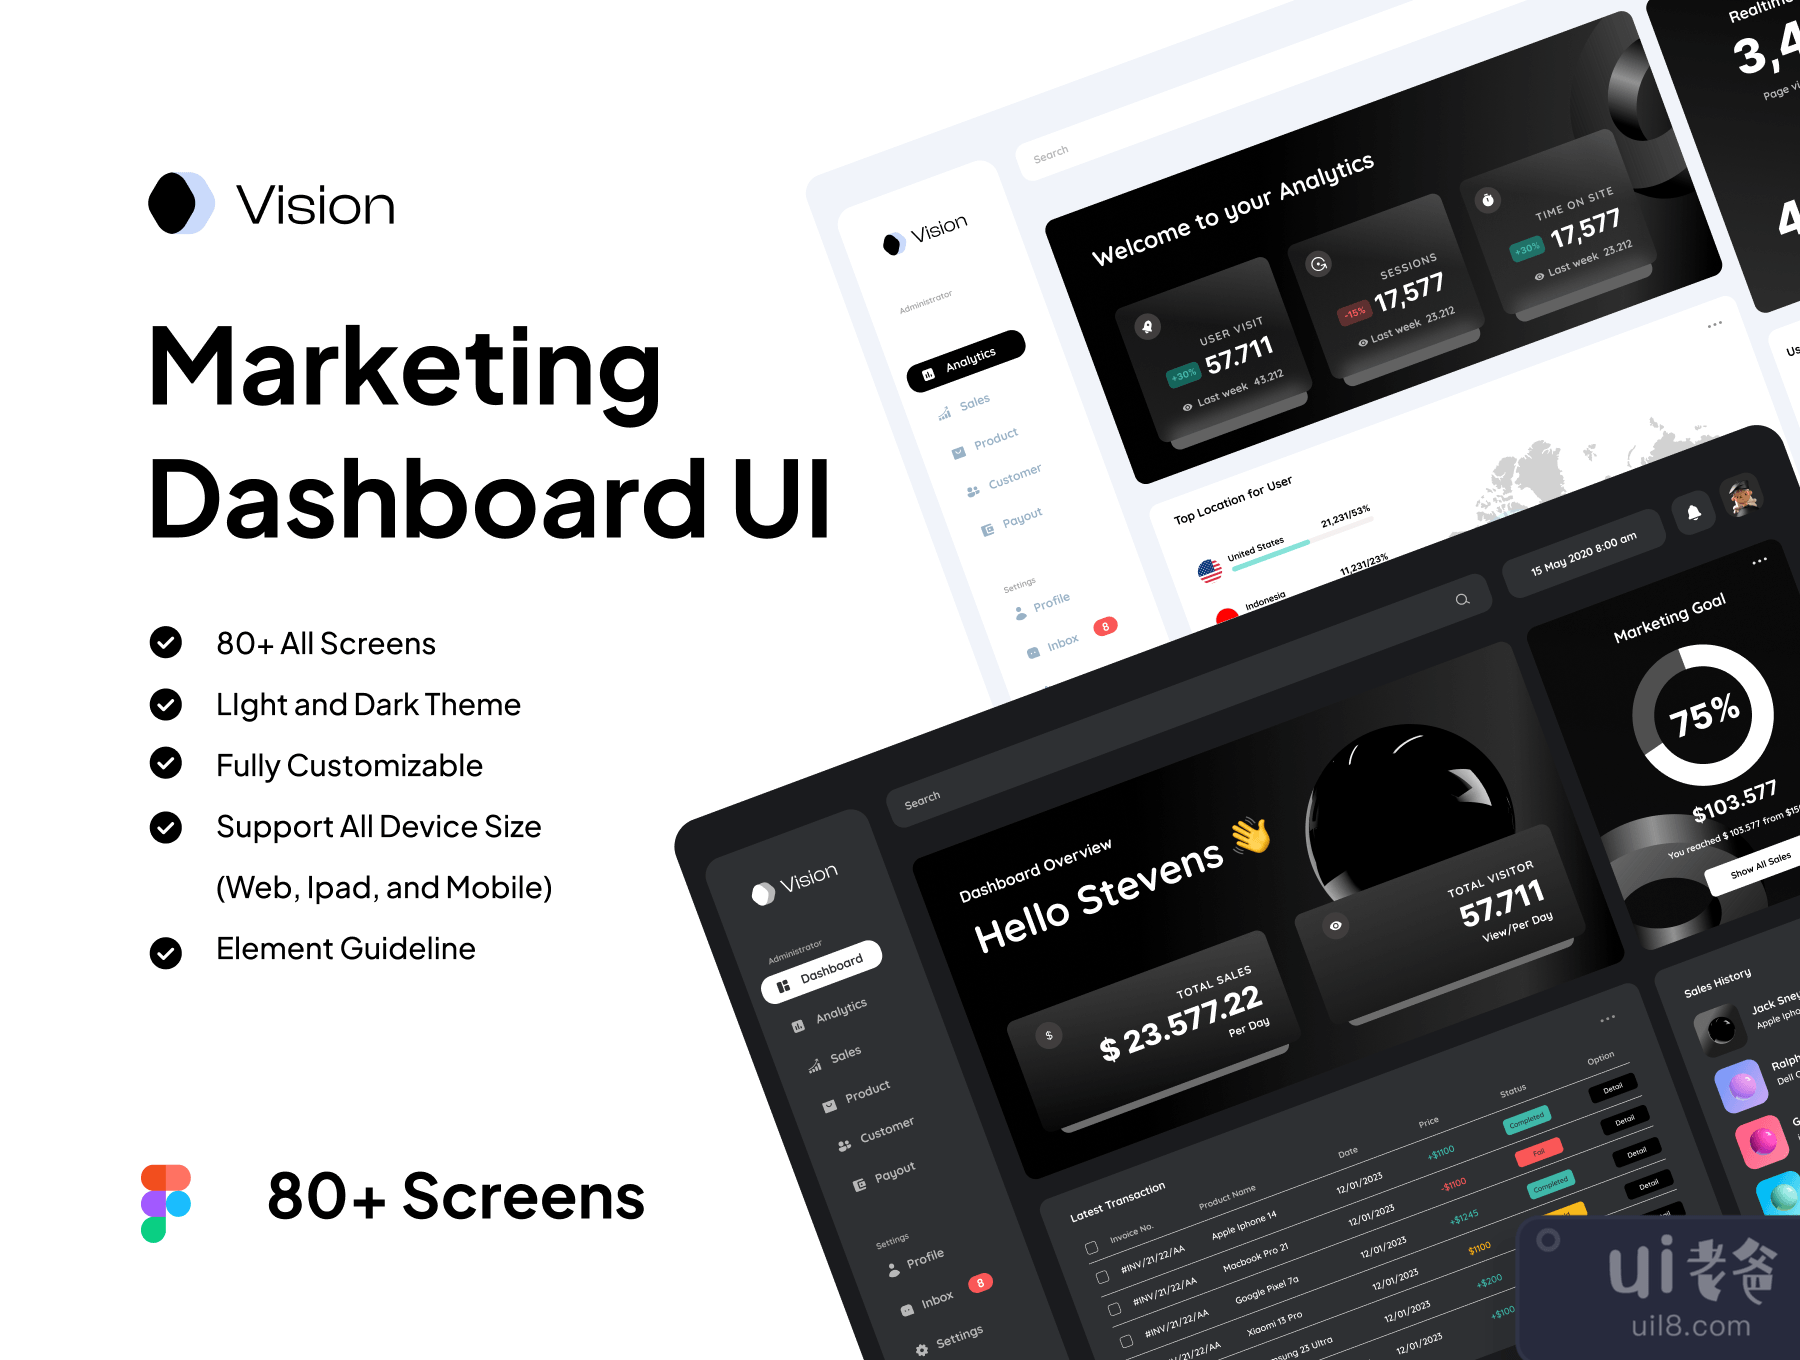 愿景 - 营销仪表板UI KIT (Vision - Marketing Dashboard UI KIT)插图